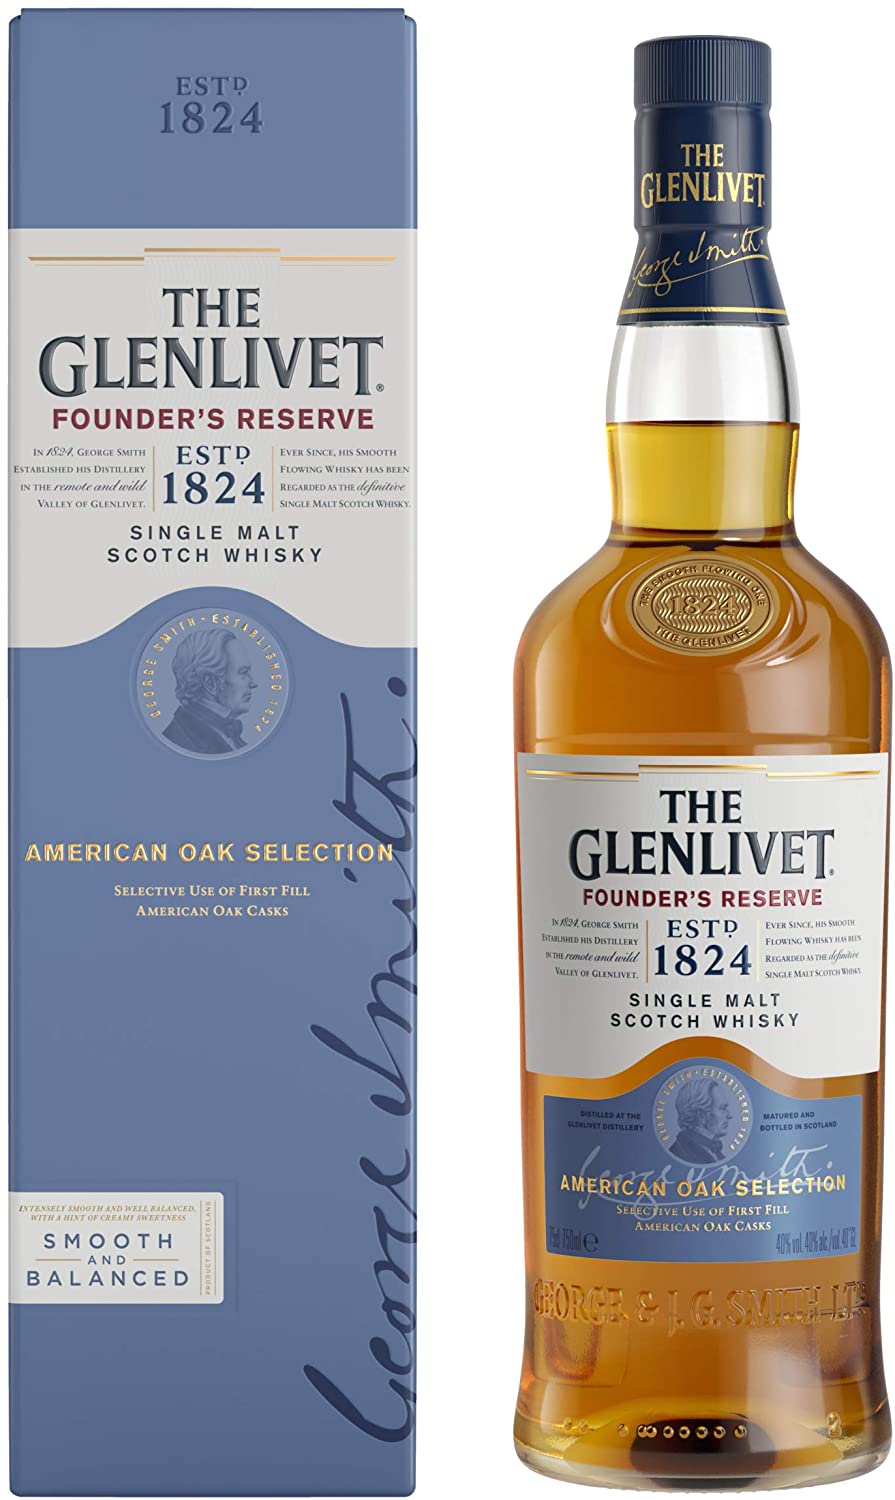 The Glenlivet Founder’s Reserve Single Malt Scotch Whisky